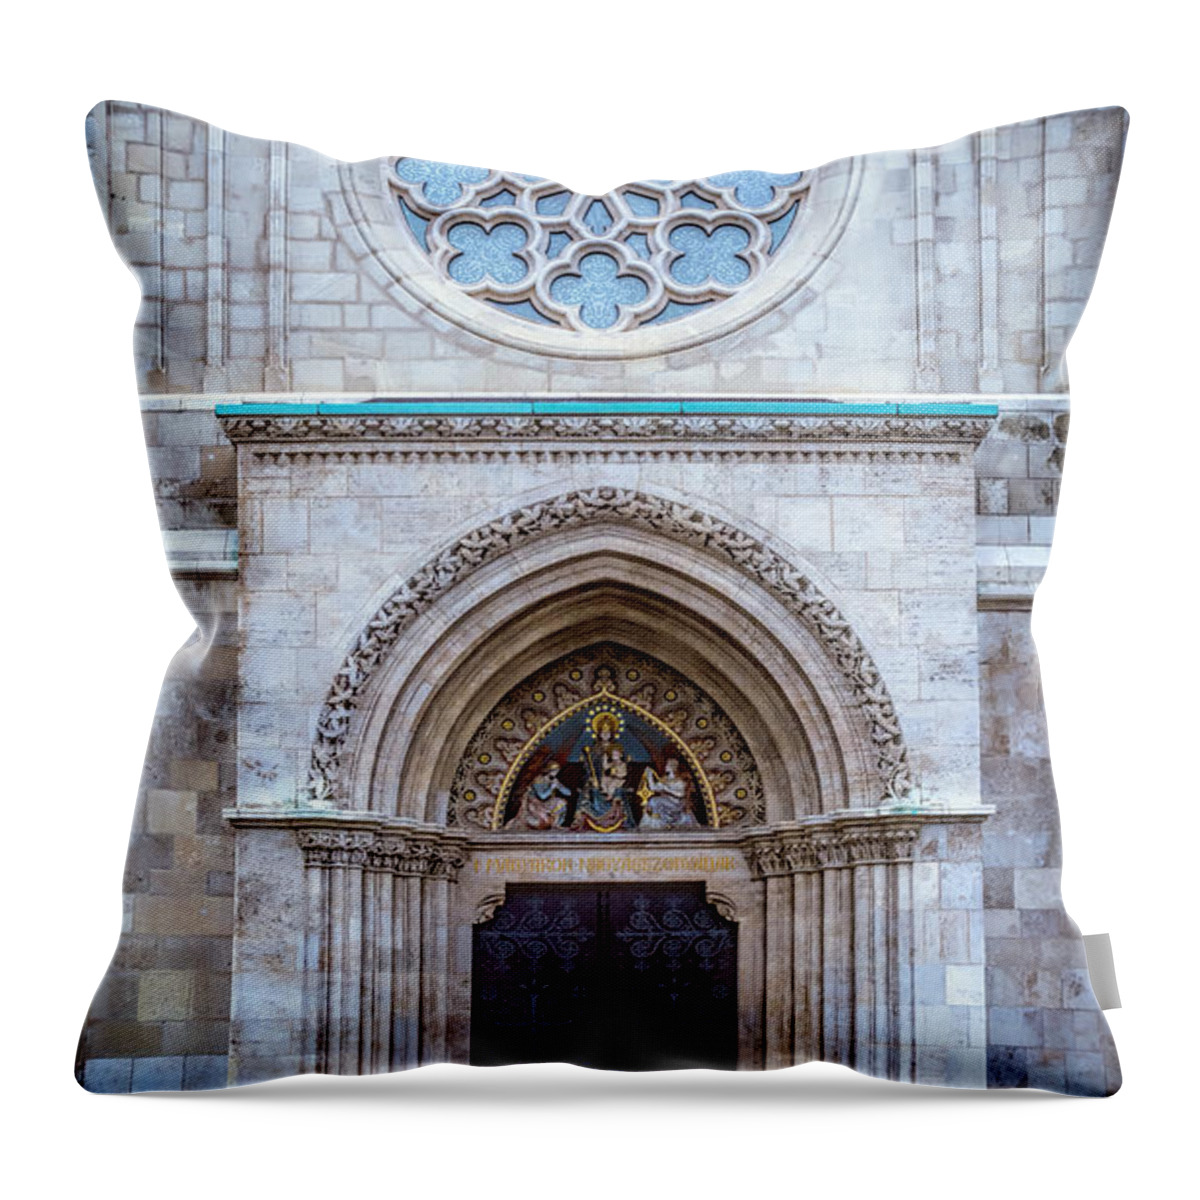 Joan Carroll Throw Pillow featuring the photograph Matthias Church Rose Window and Portal by Joan Carroll